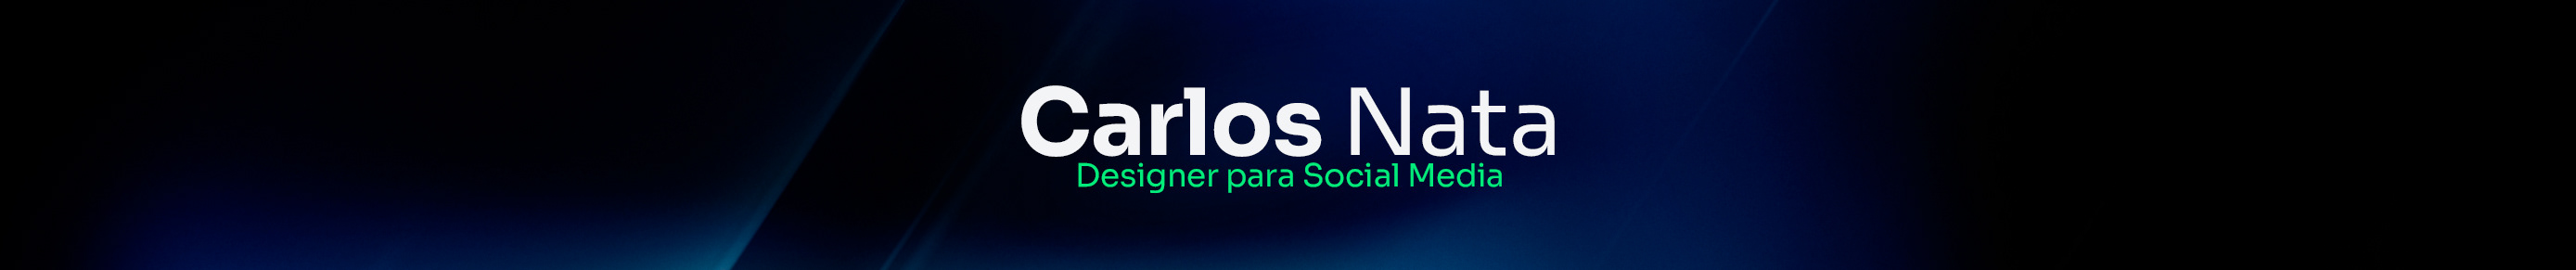 Carlos Nata's profile banner